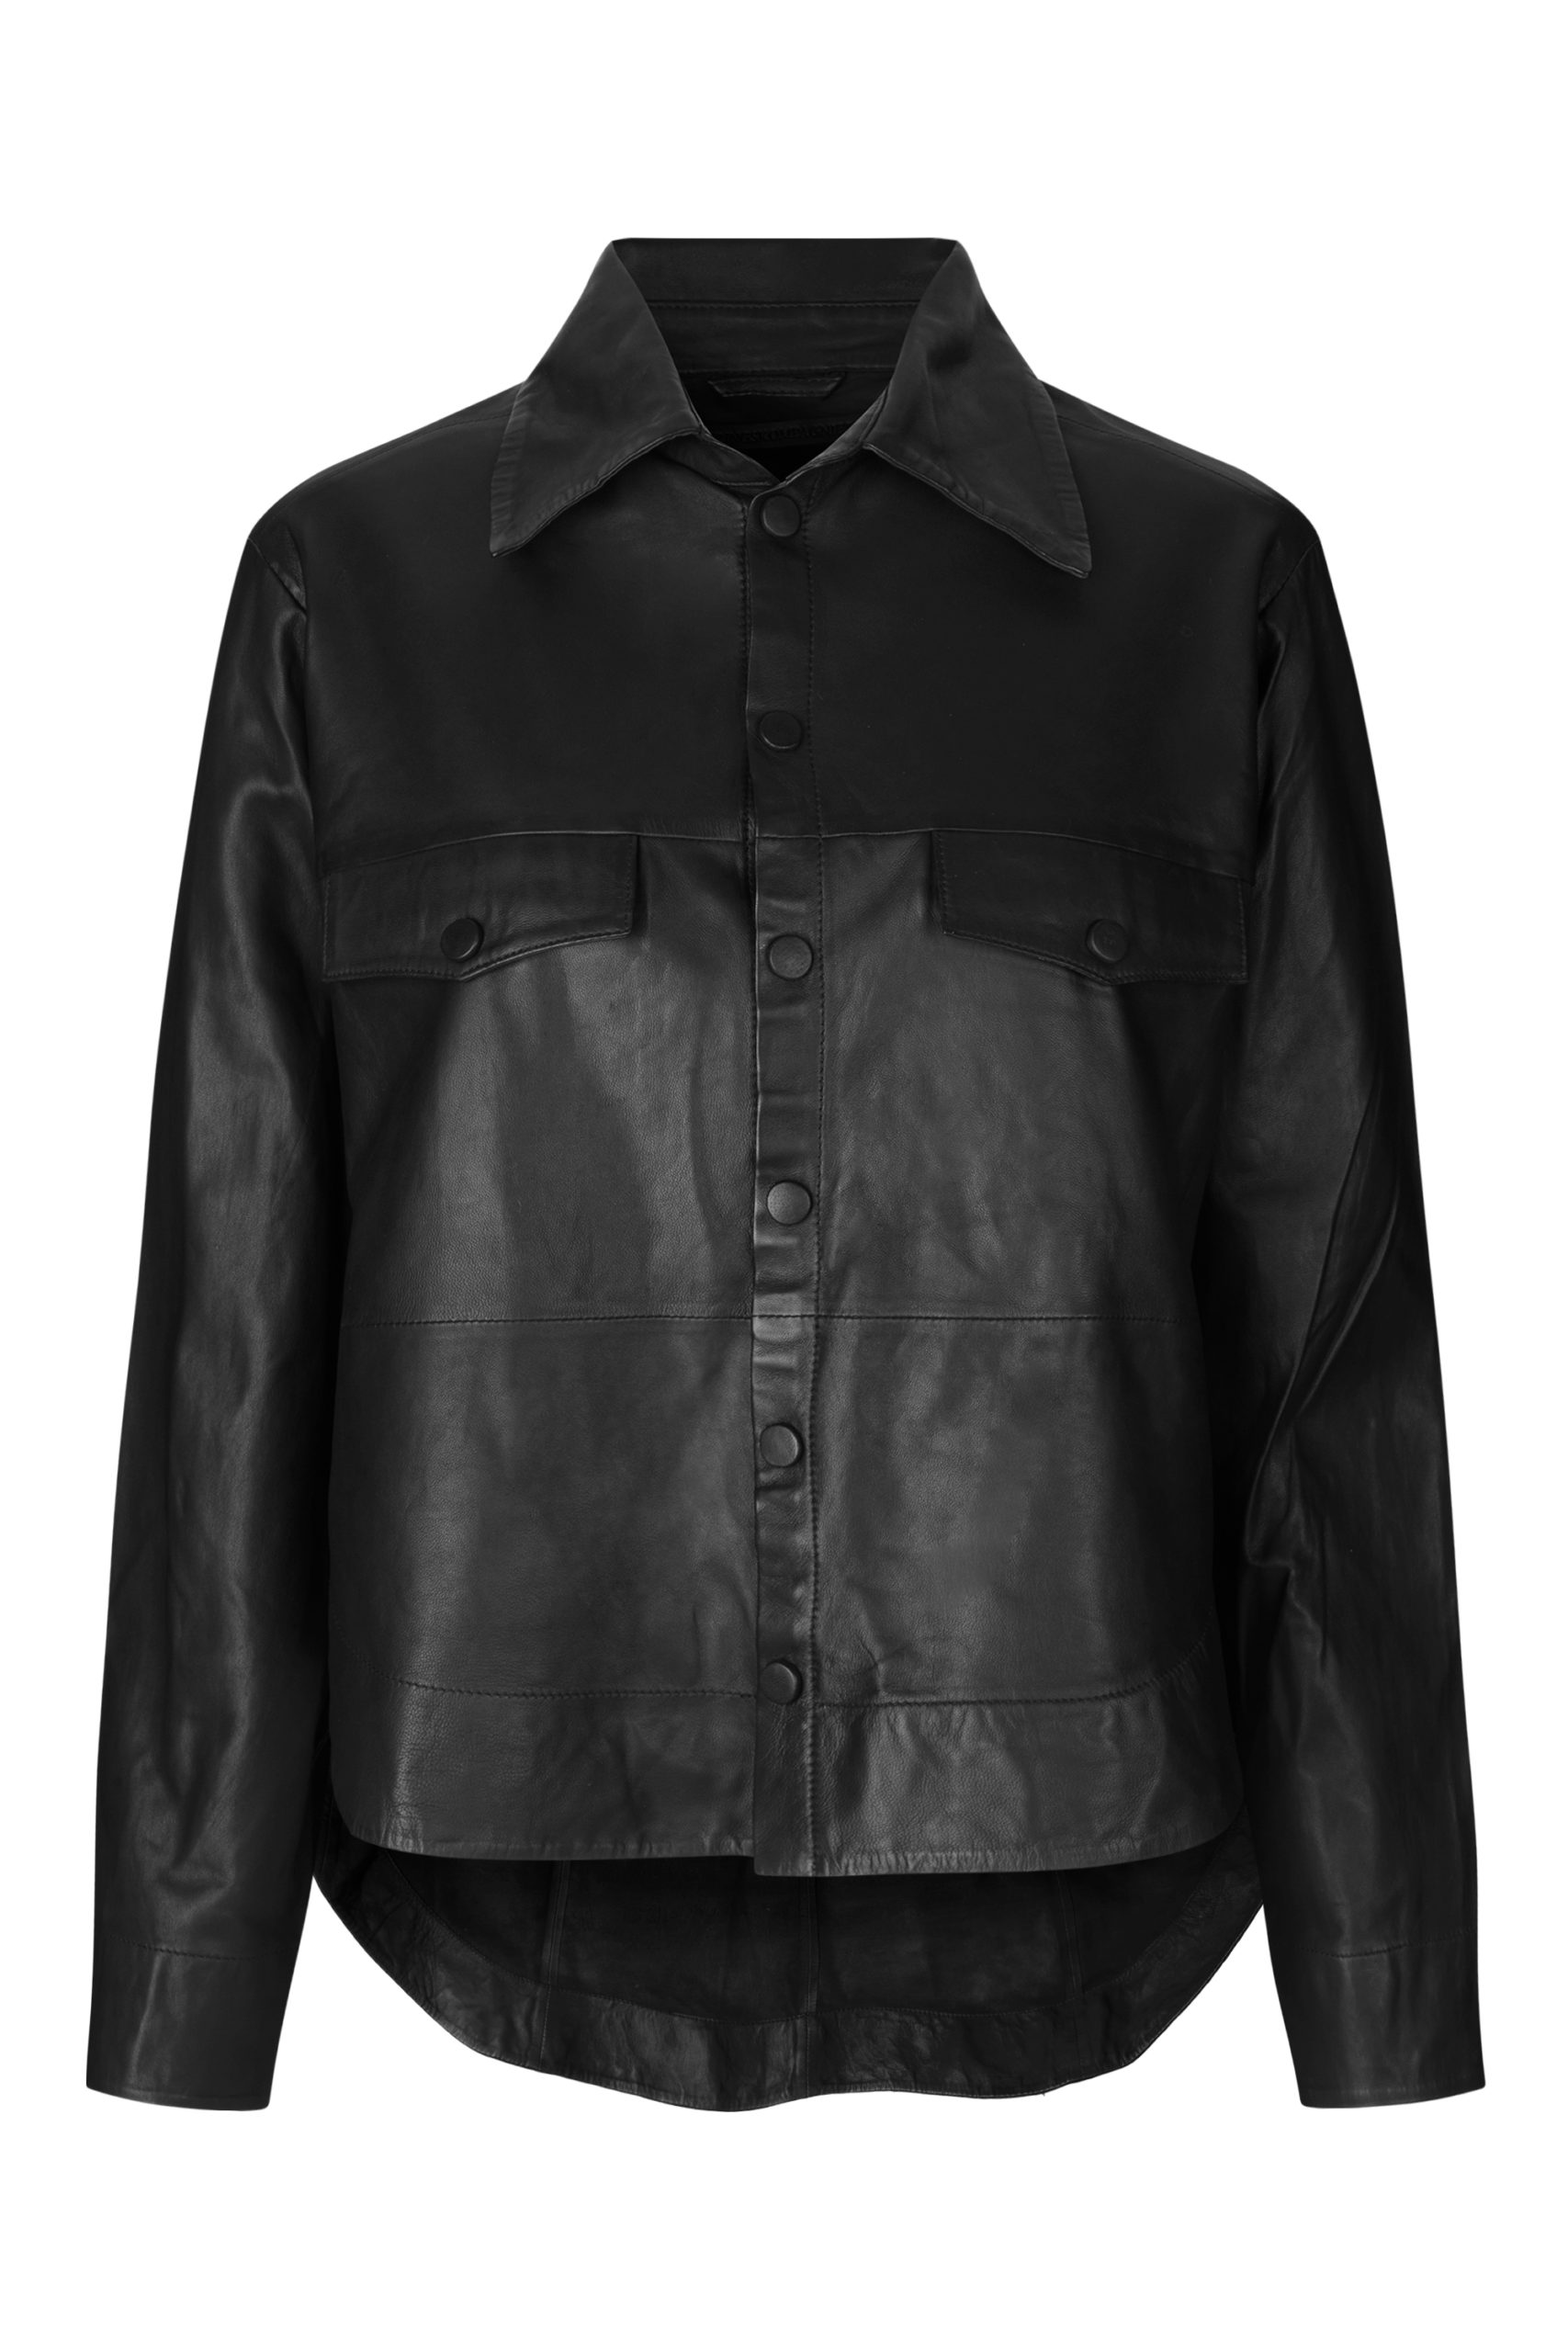 MDK Naomi Thin Leather Shirt - Black - Stick and Ribbon